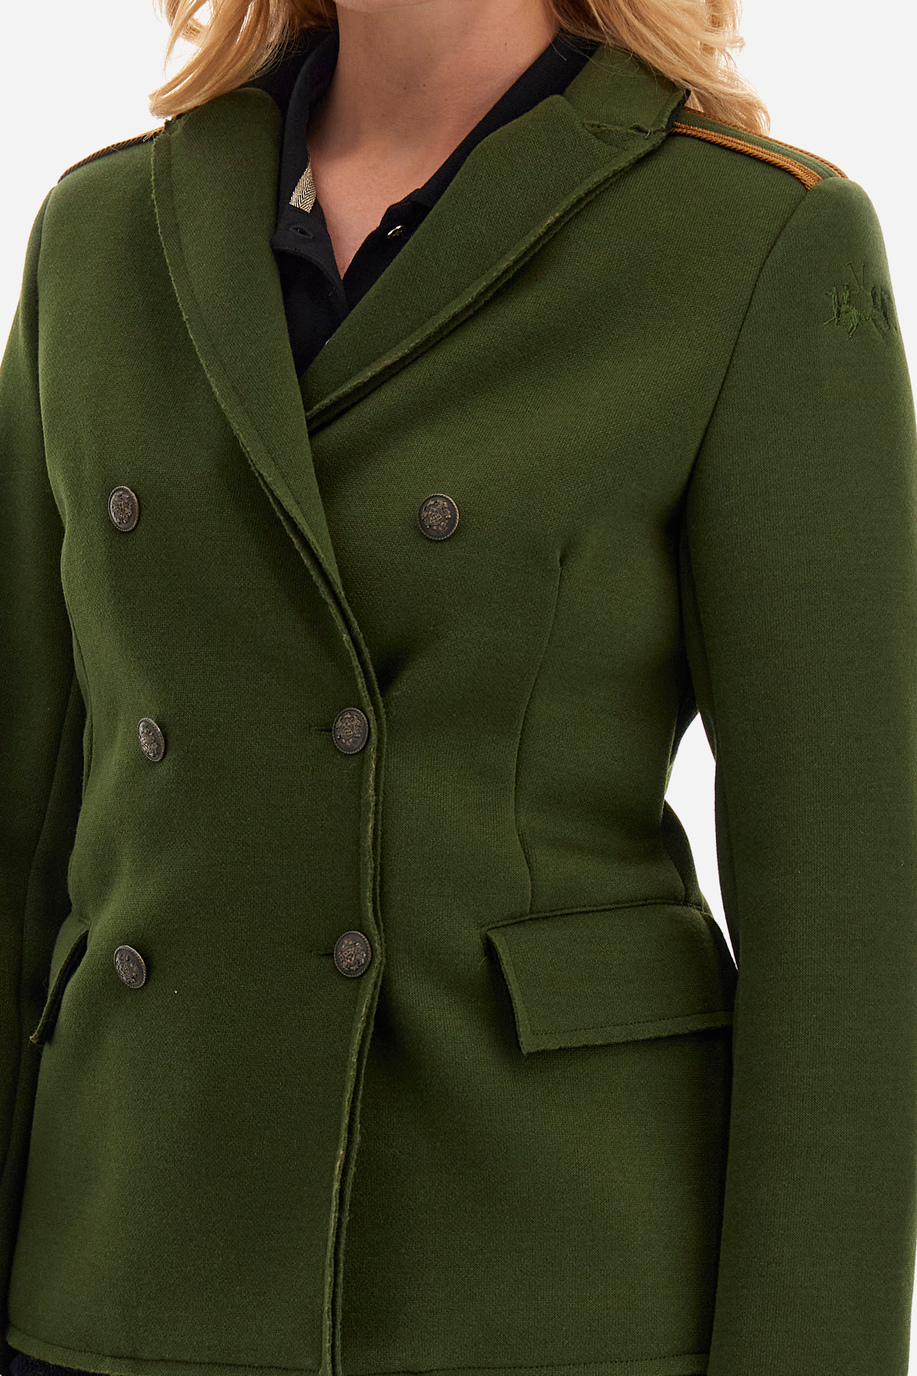 Woman jacket in regular fit - Wilona - Business Looks Women | La Martina - Official Online Shop